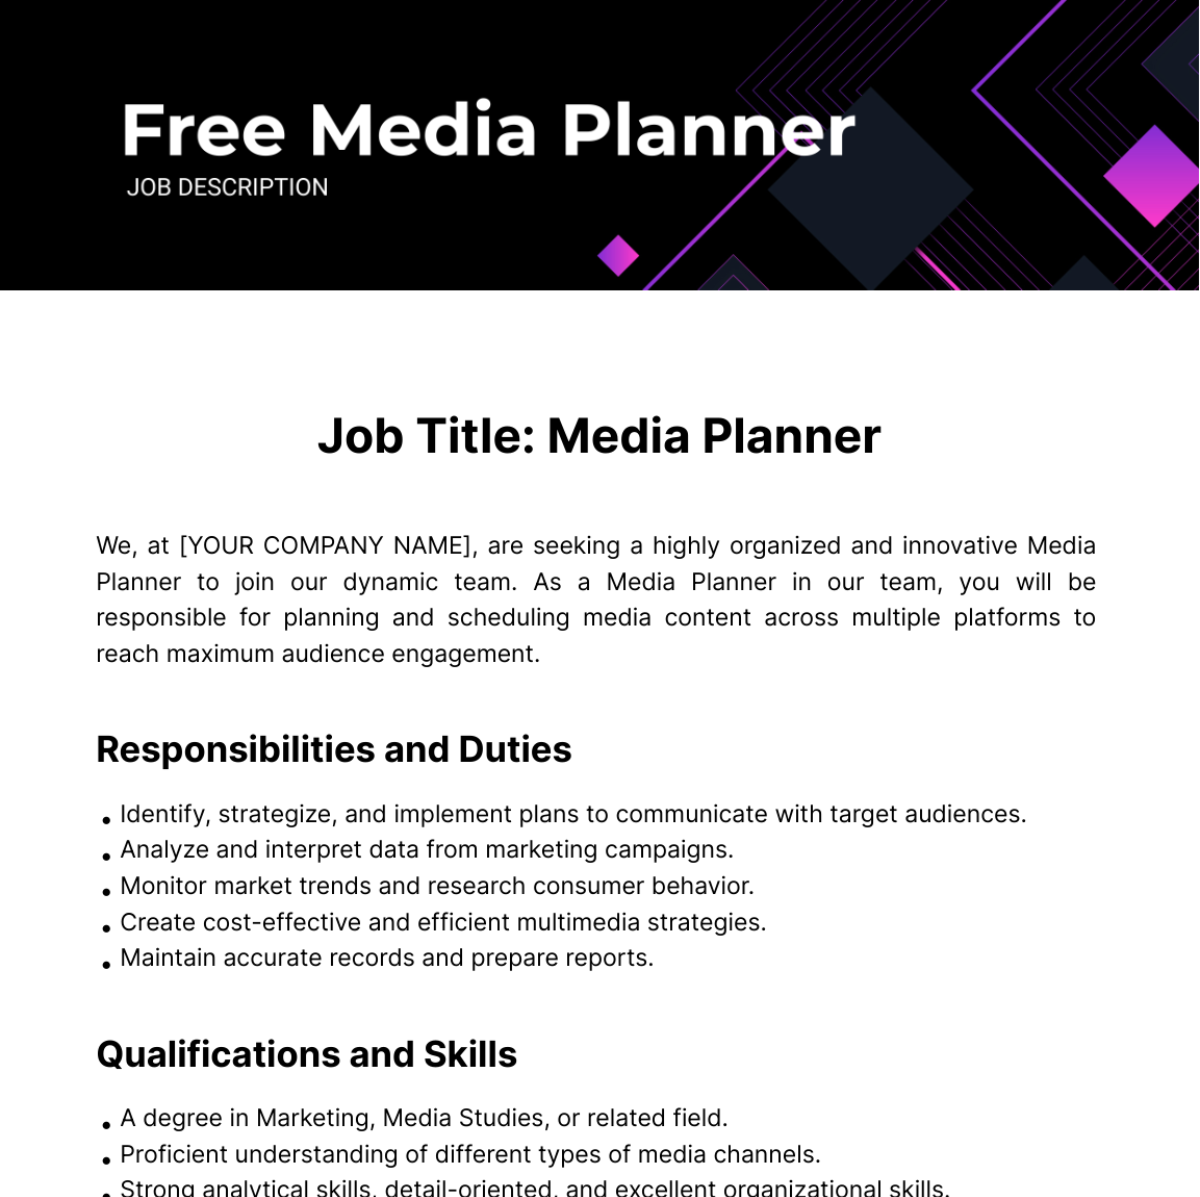 Free Media Planner Job Description Template